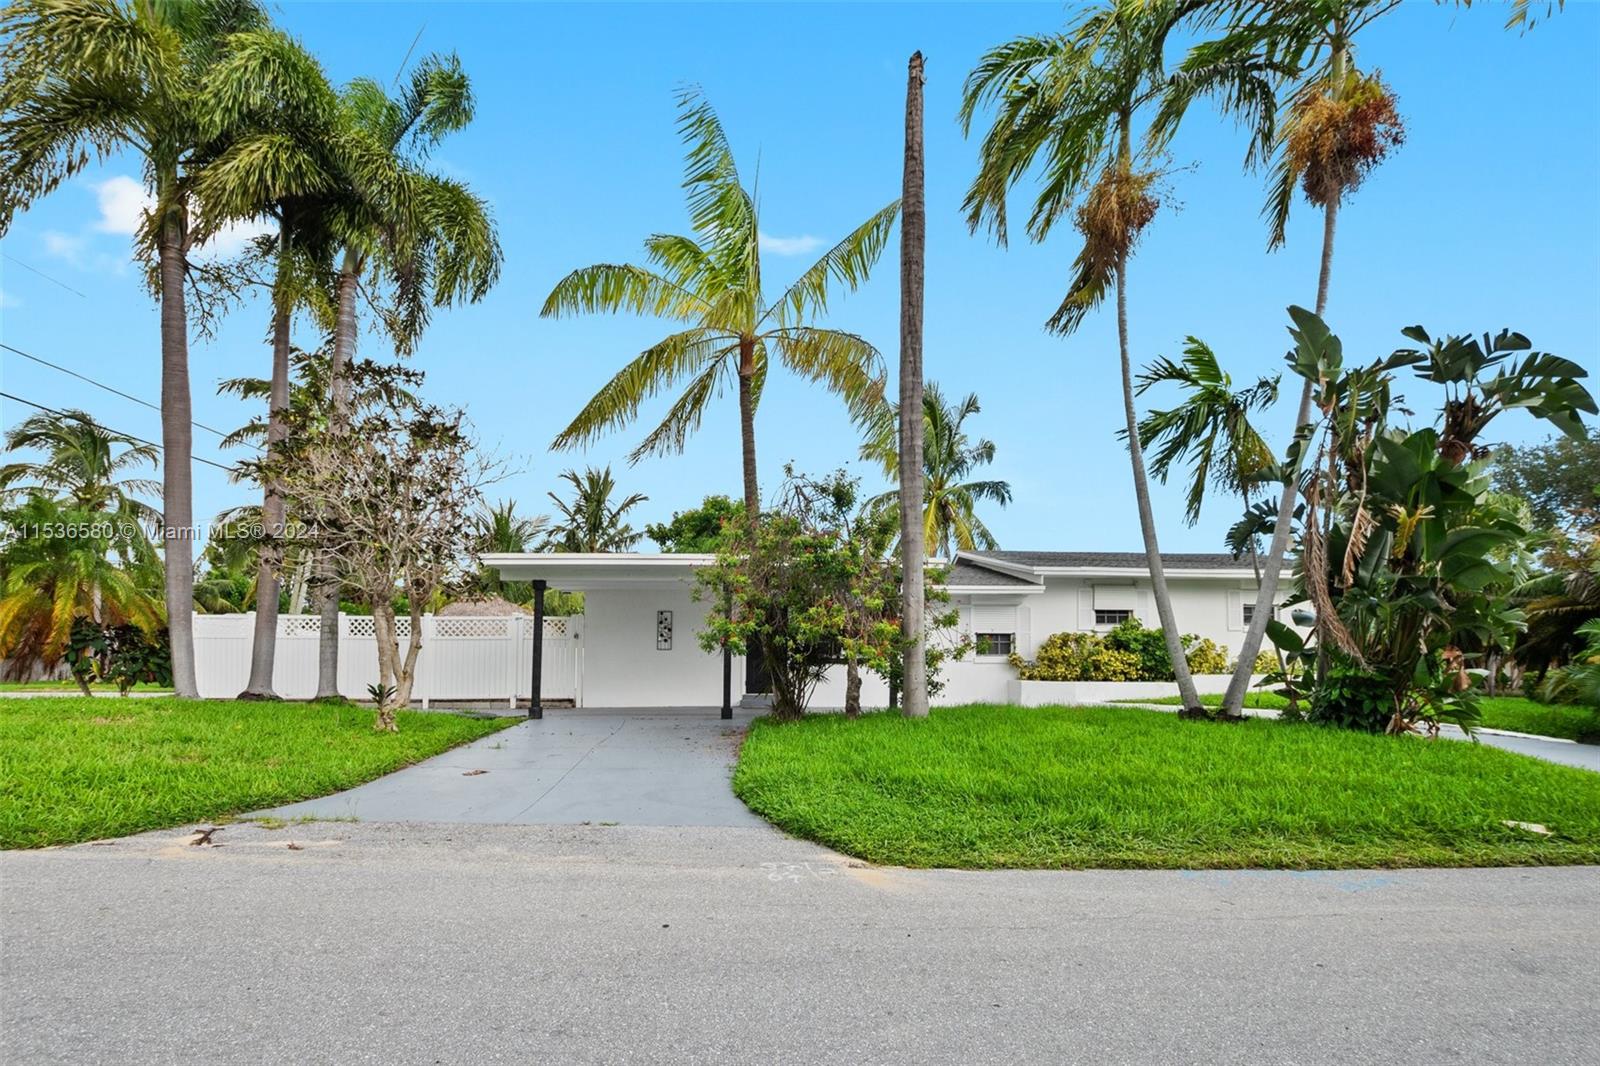 Property for Sale at 231 N Seacrest Cir, Delray Beach, Broward County, Florida - Bedrooms: 4 
Bathrooms: 2  - $949,999